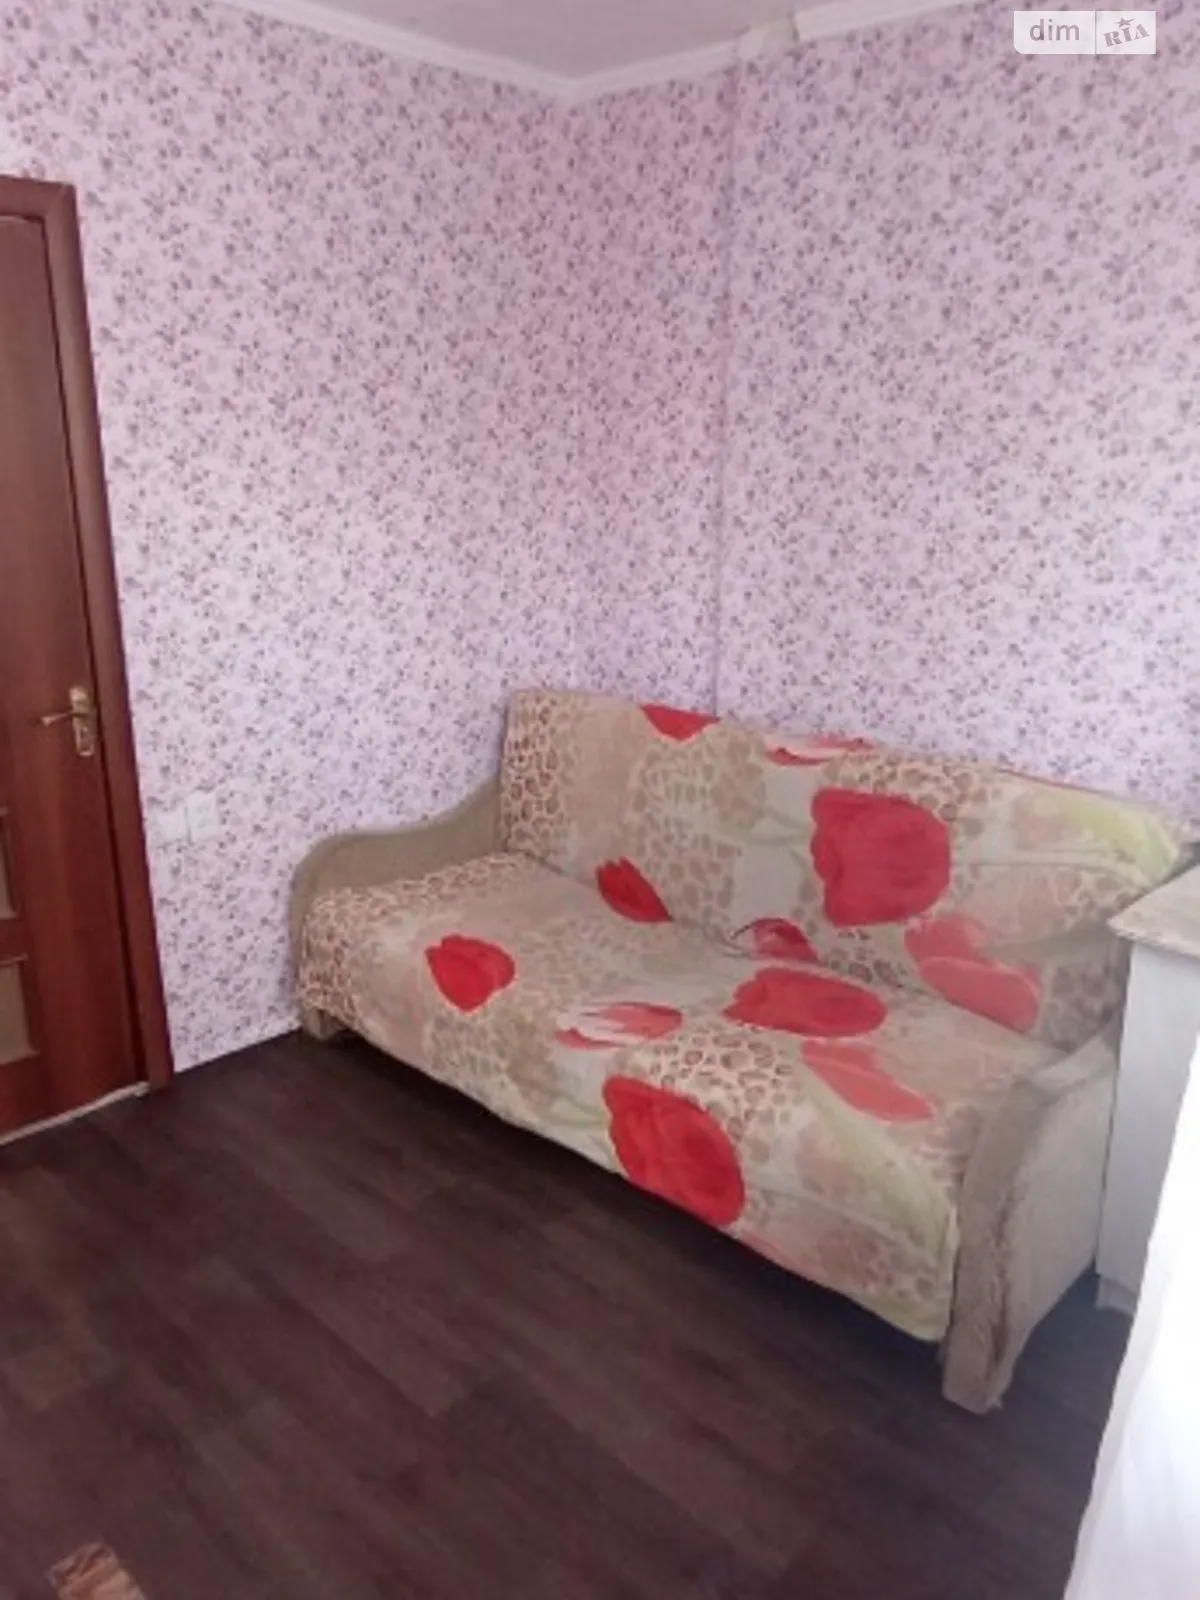 Продается комната 36.6 кв. м в Одессе, цена: 18600 $ - фото 1